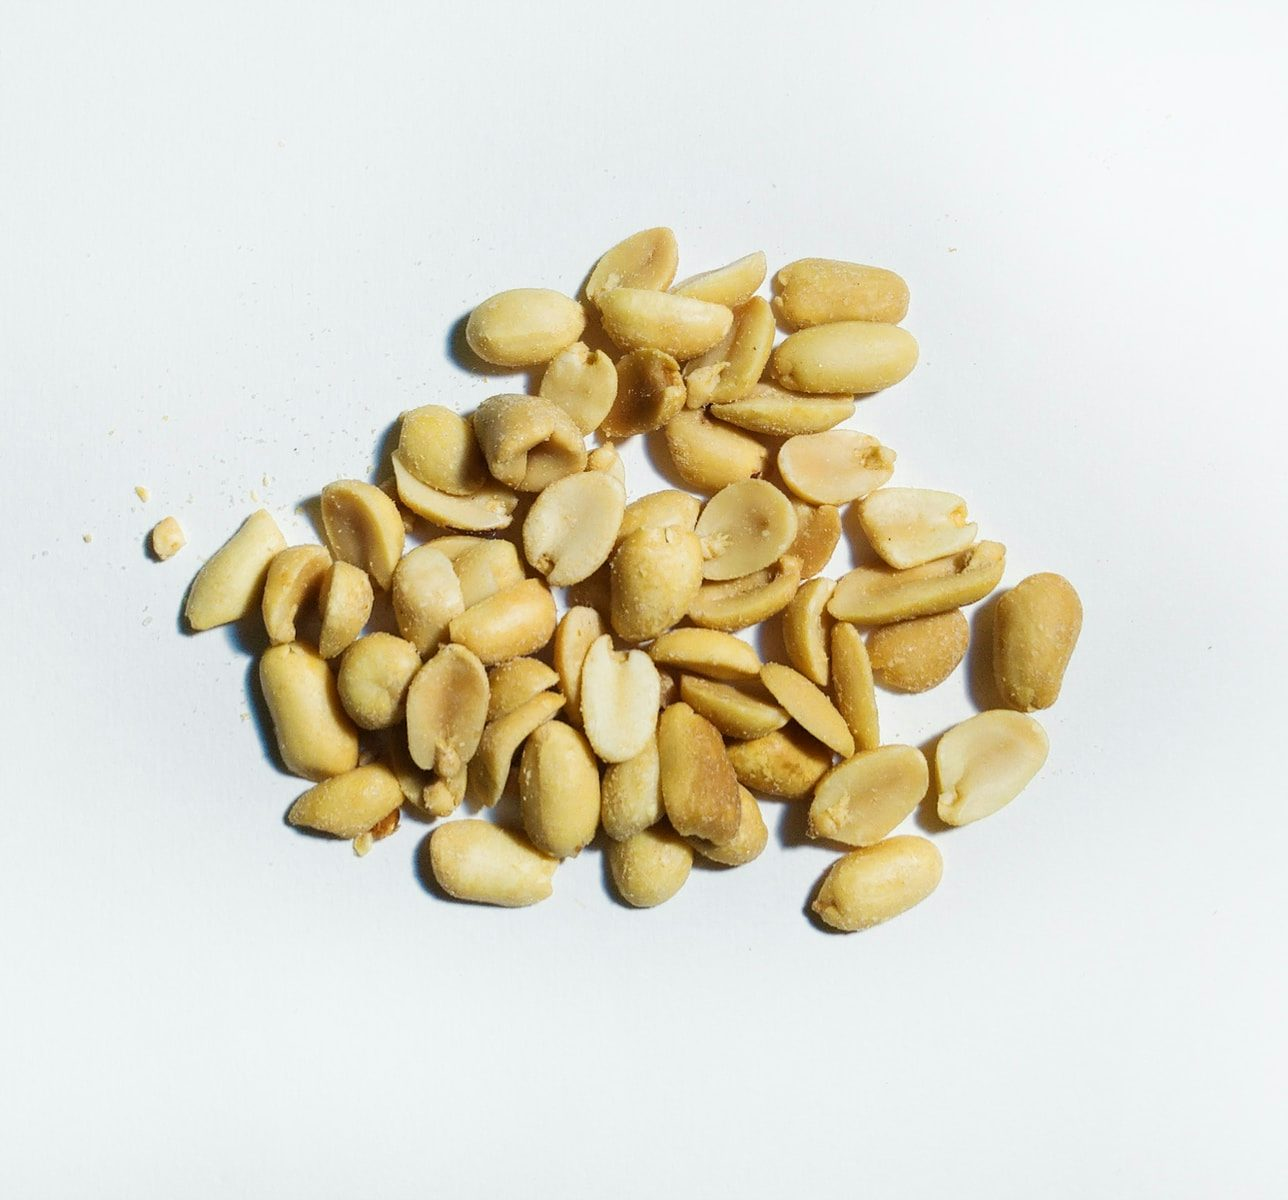 Peanuts canning